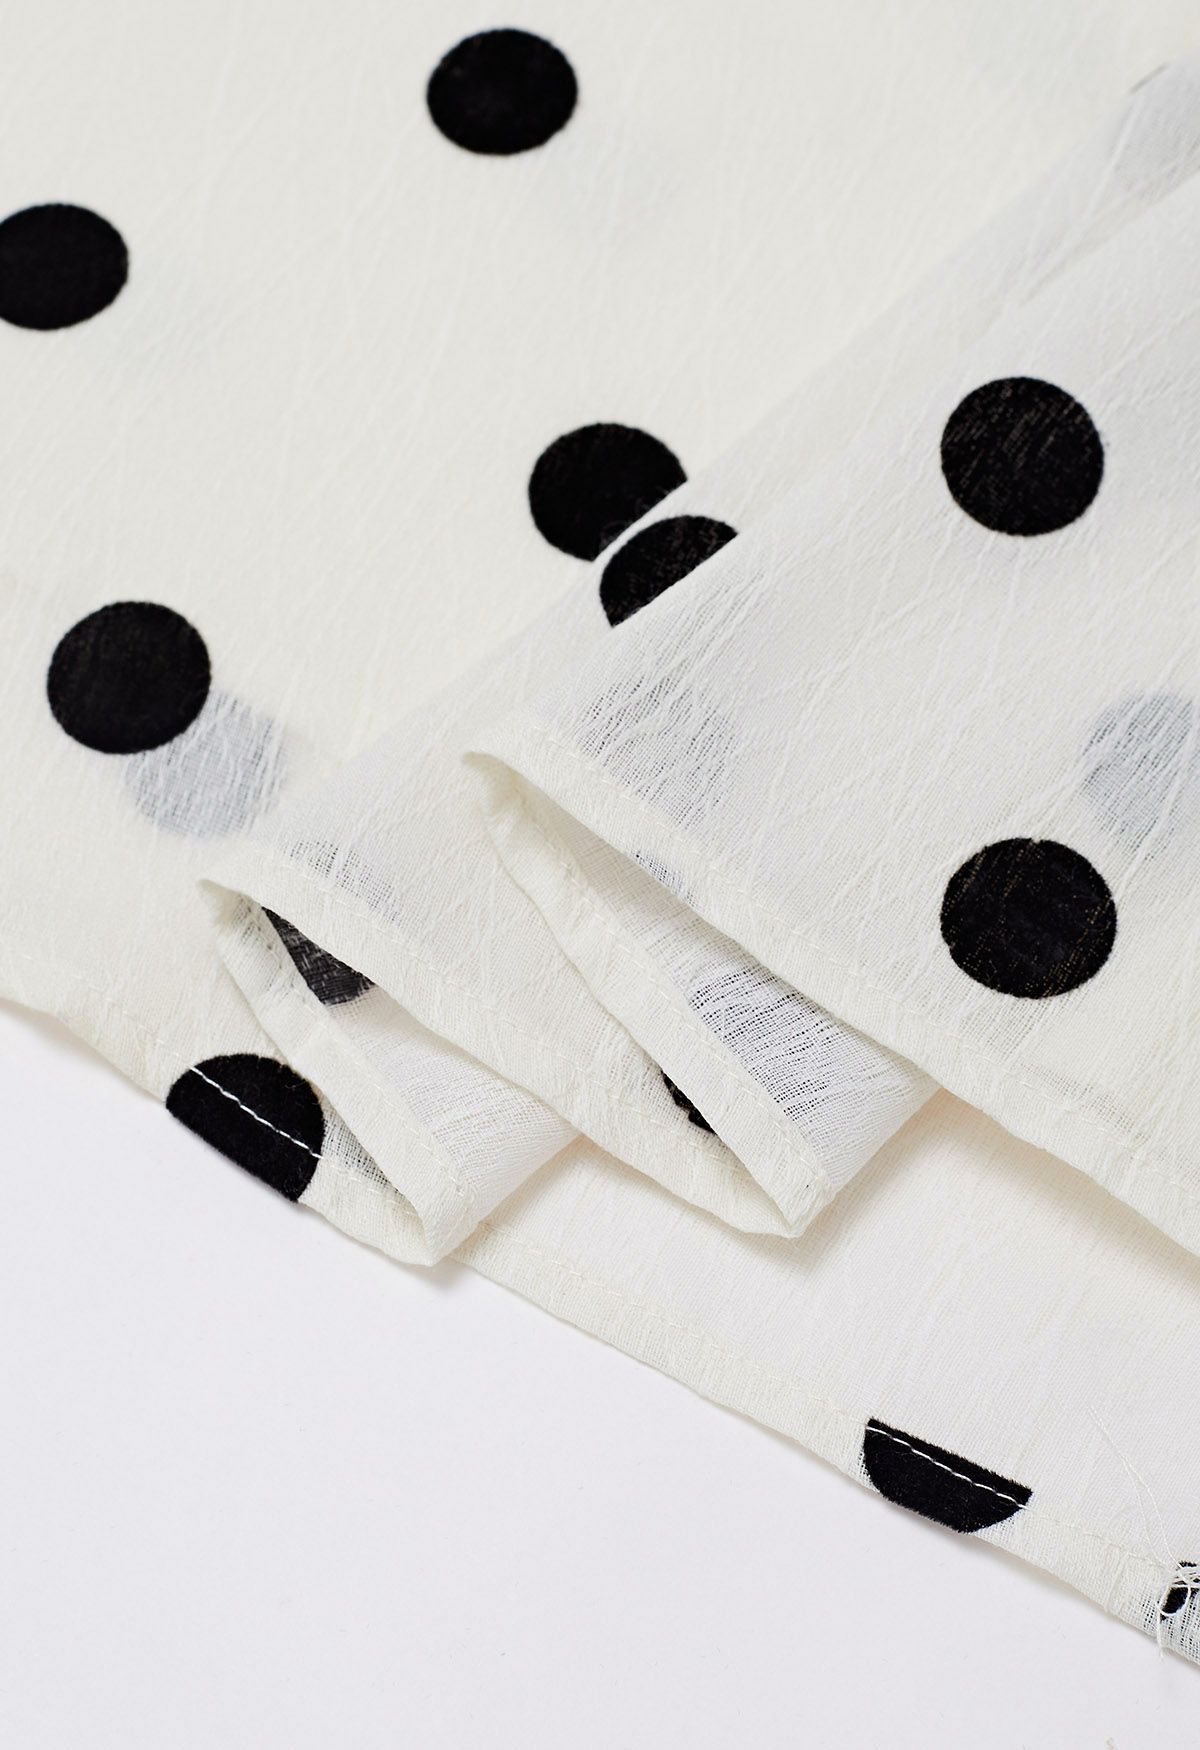 Texture Polka Dot Printed Pleated Maxi Skirt in Cream